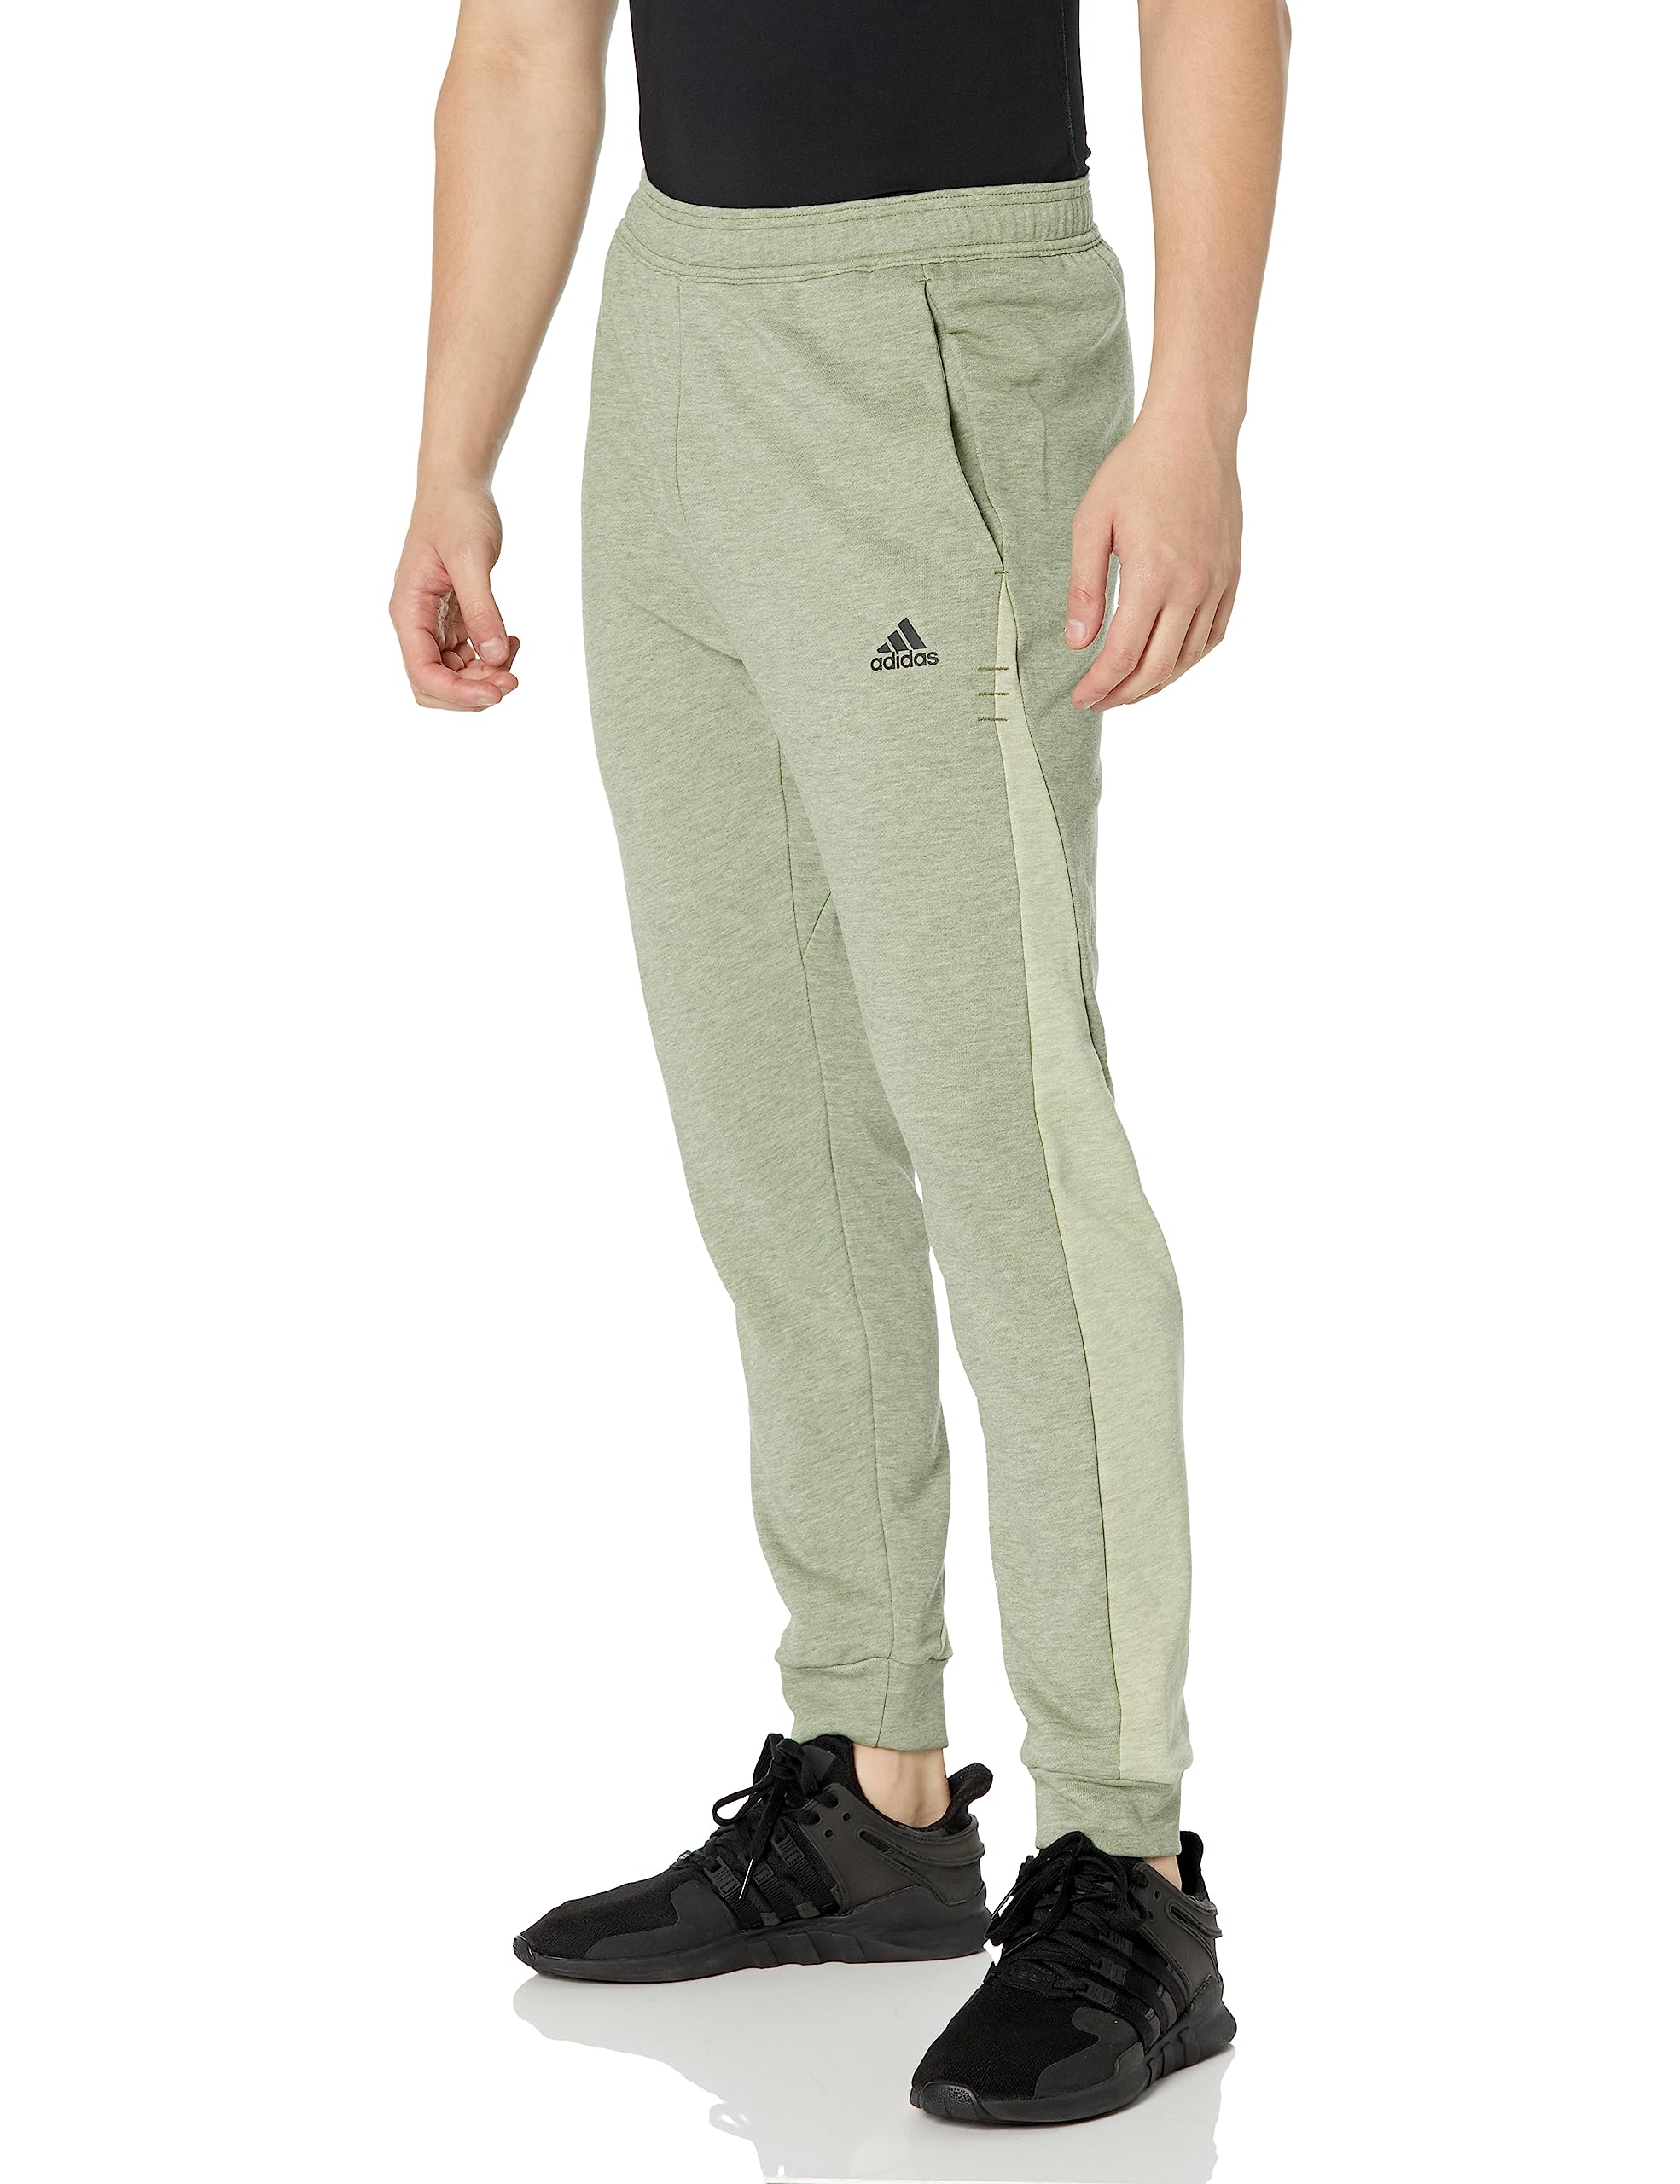 adidas Men's Mélange Pants (Olive Strata Melange/Legacy Green Melange) from $20.62+ Free Shipping w/ Prime or on $35+